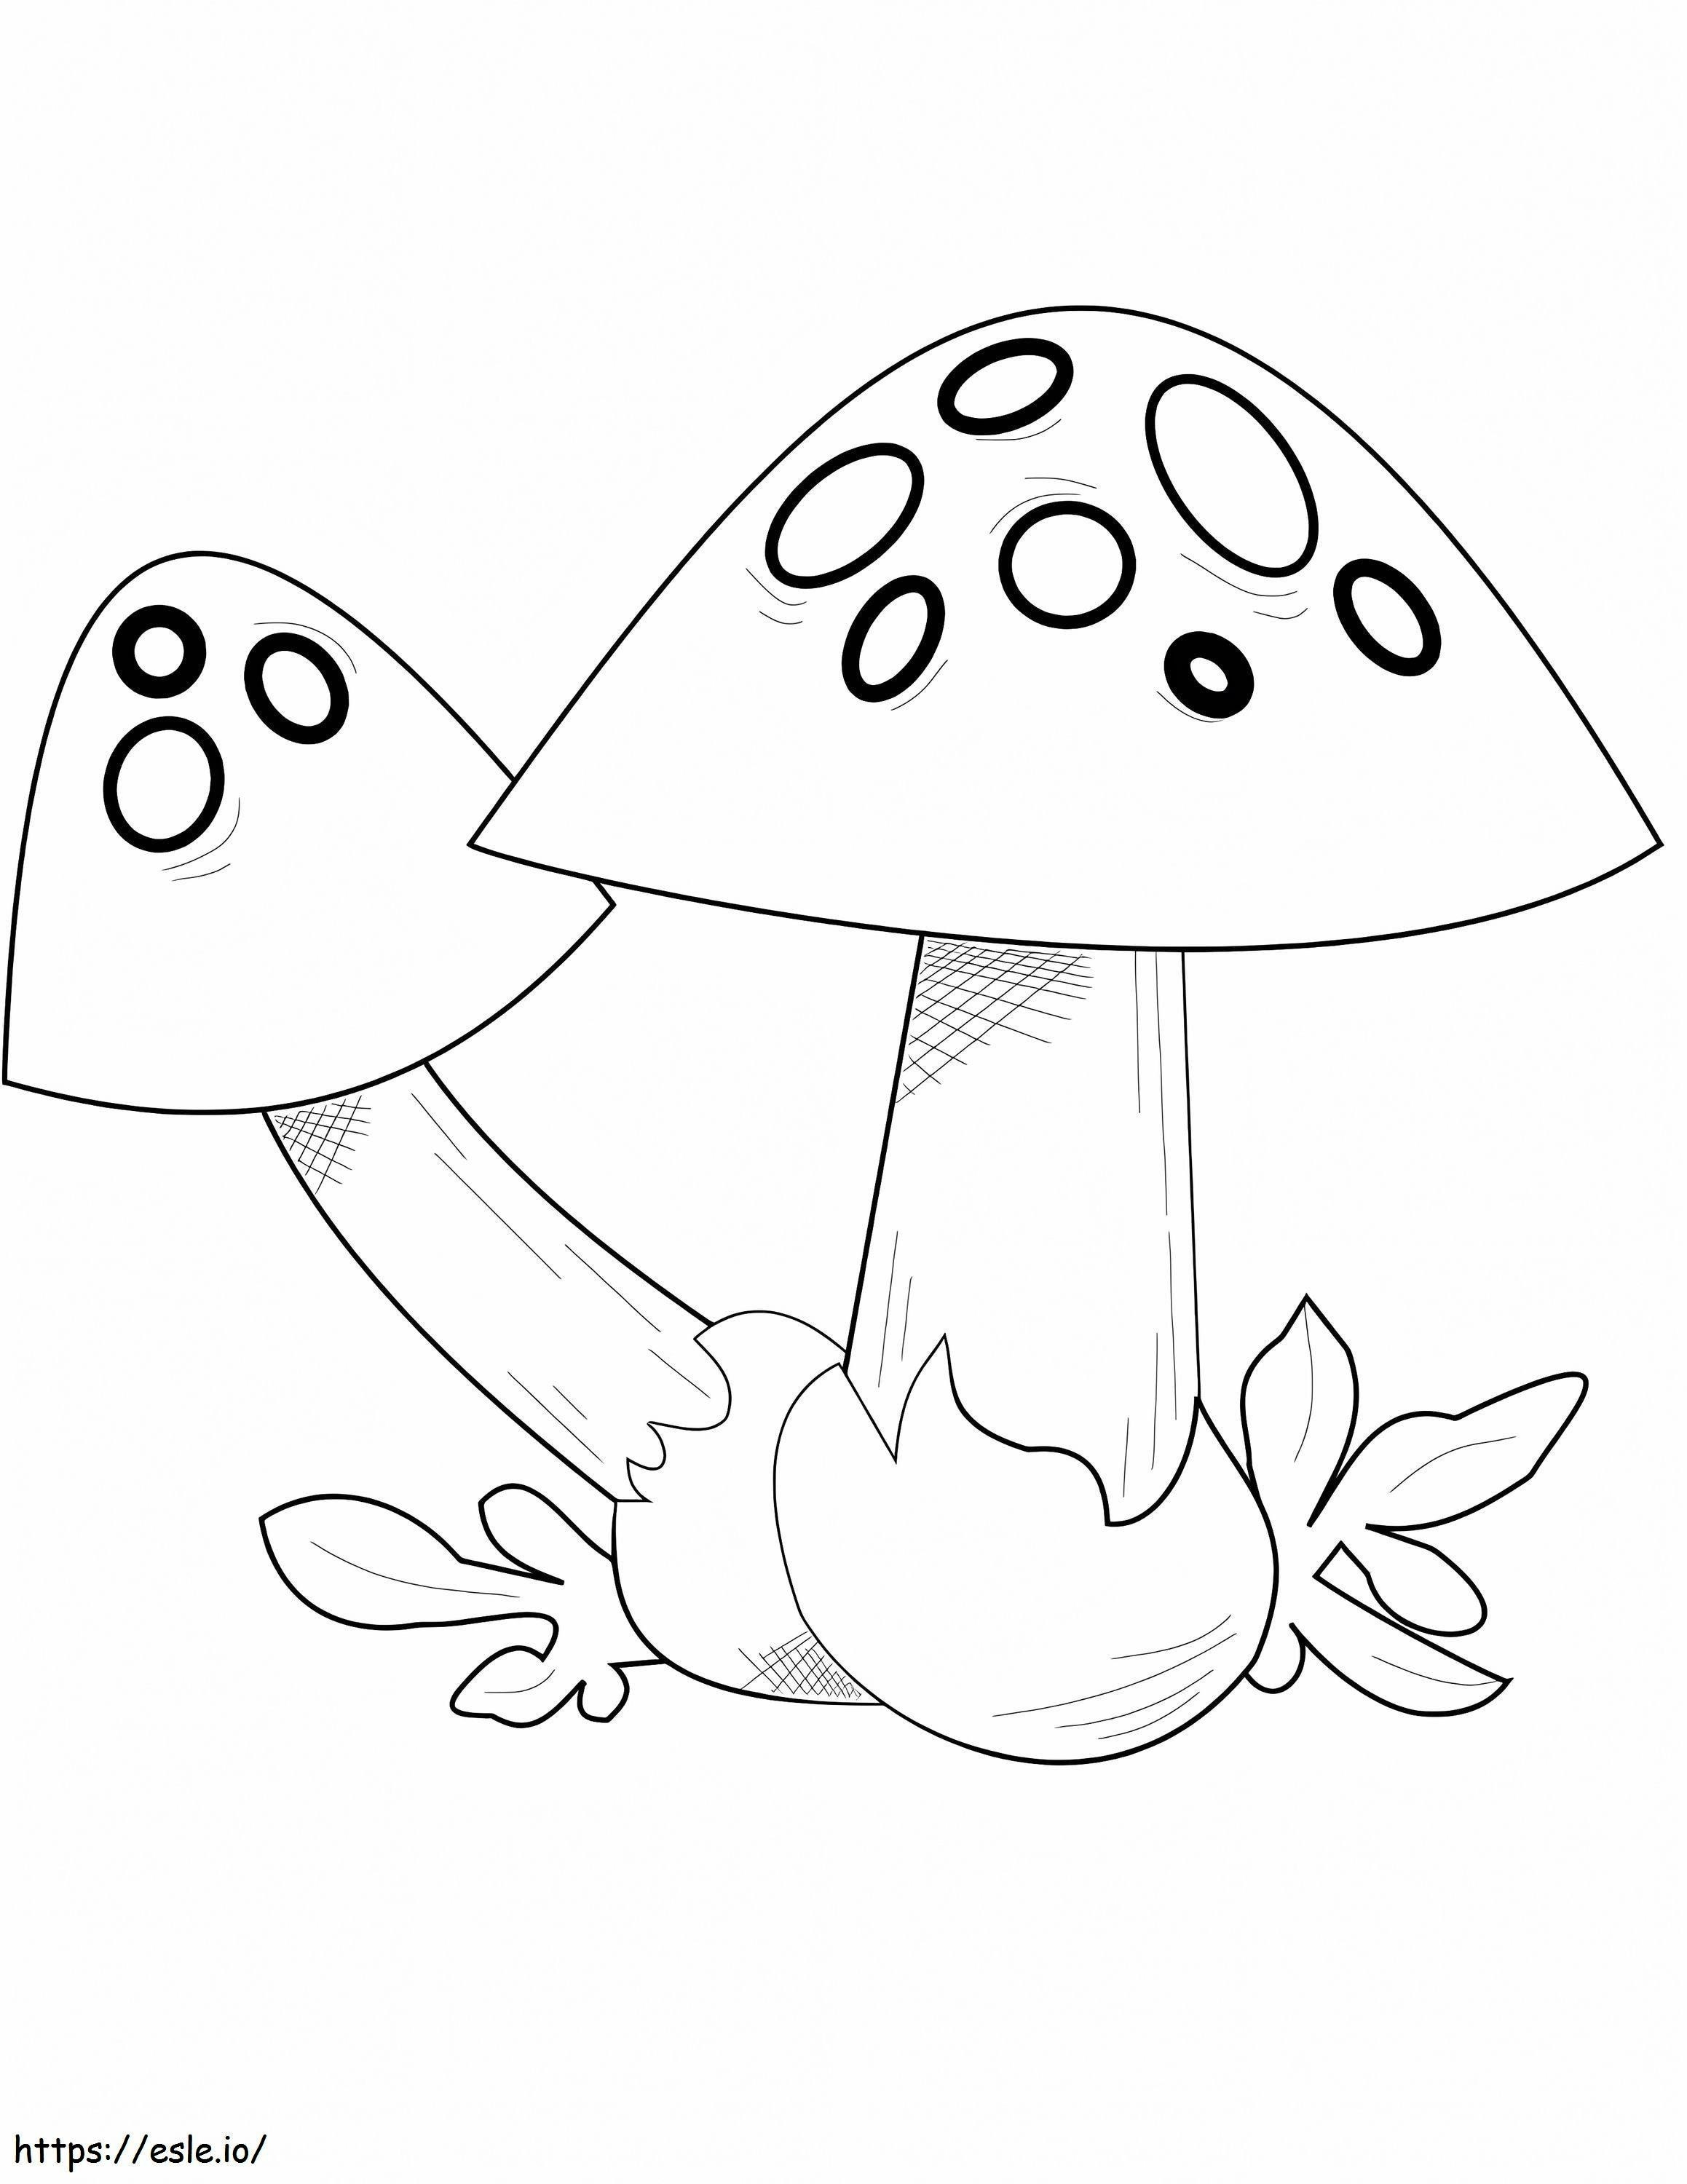 Mushrooms 5 coloring page